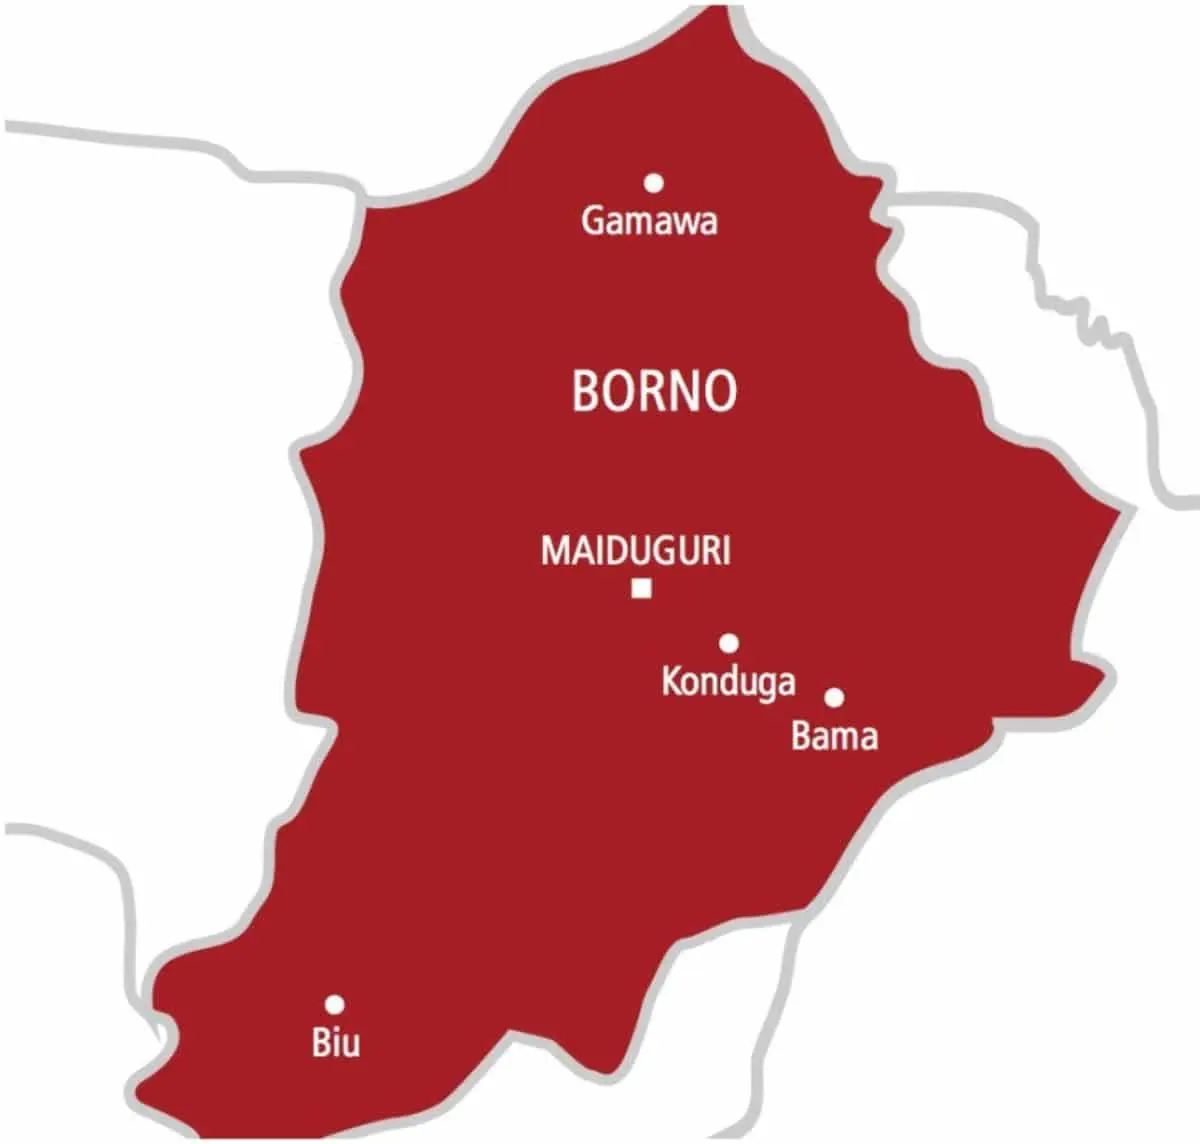 16 Die From Bomb Blast In Borno 